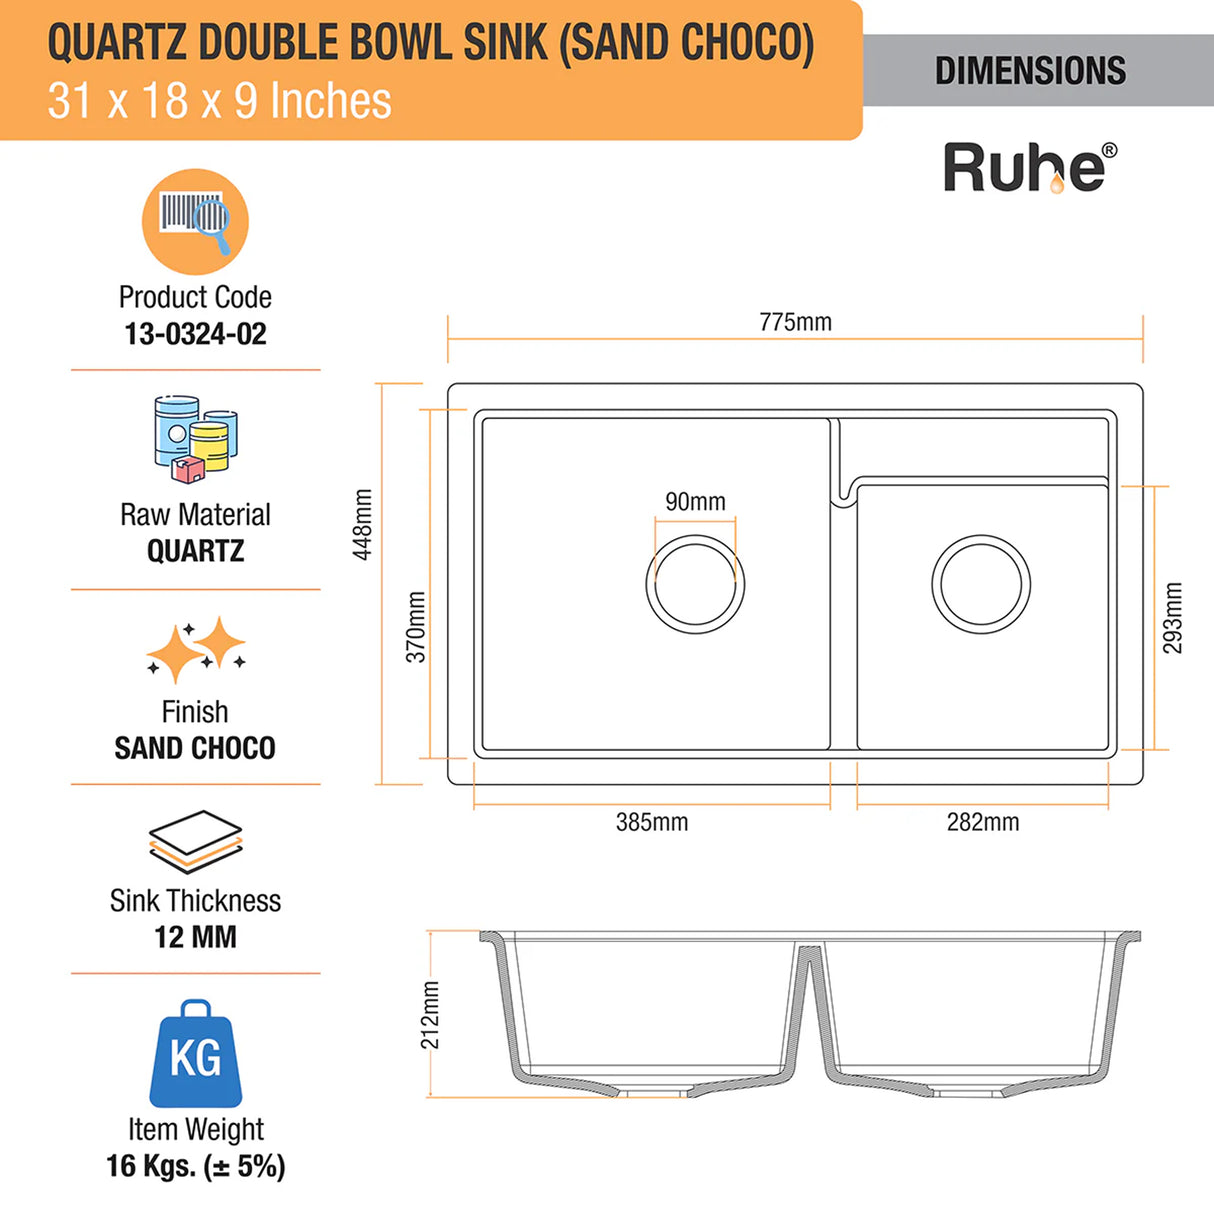 Quartz Double Bowl Kitchen Sink - Sand Choco (31 x 18 x 9 inches) - by Ruhe®